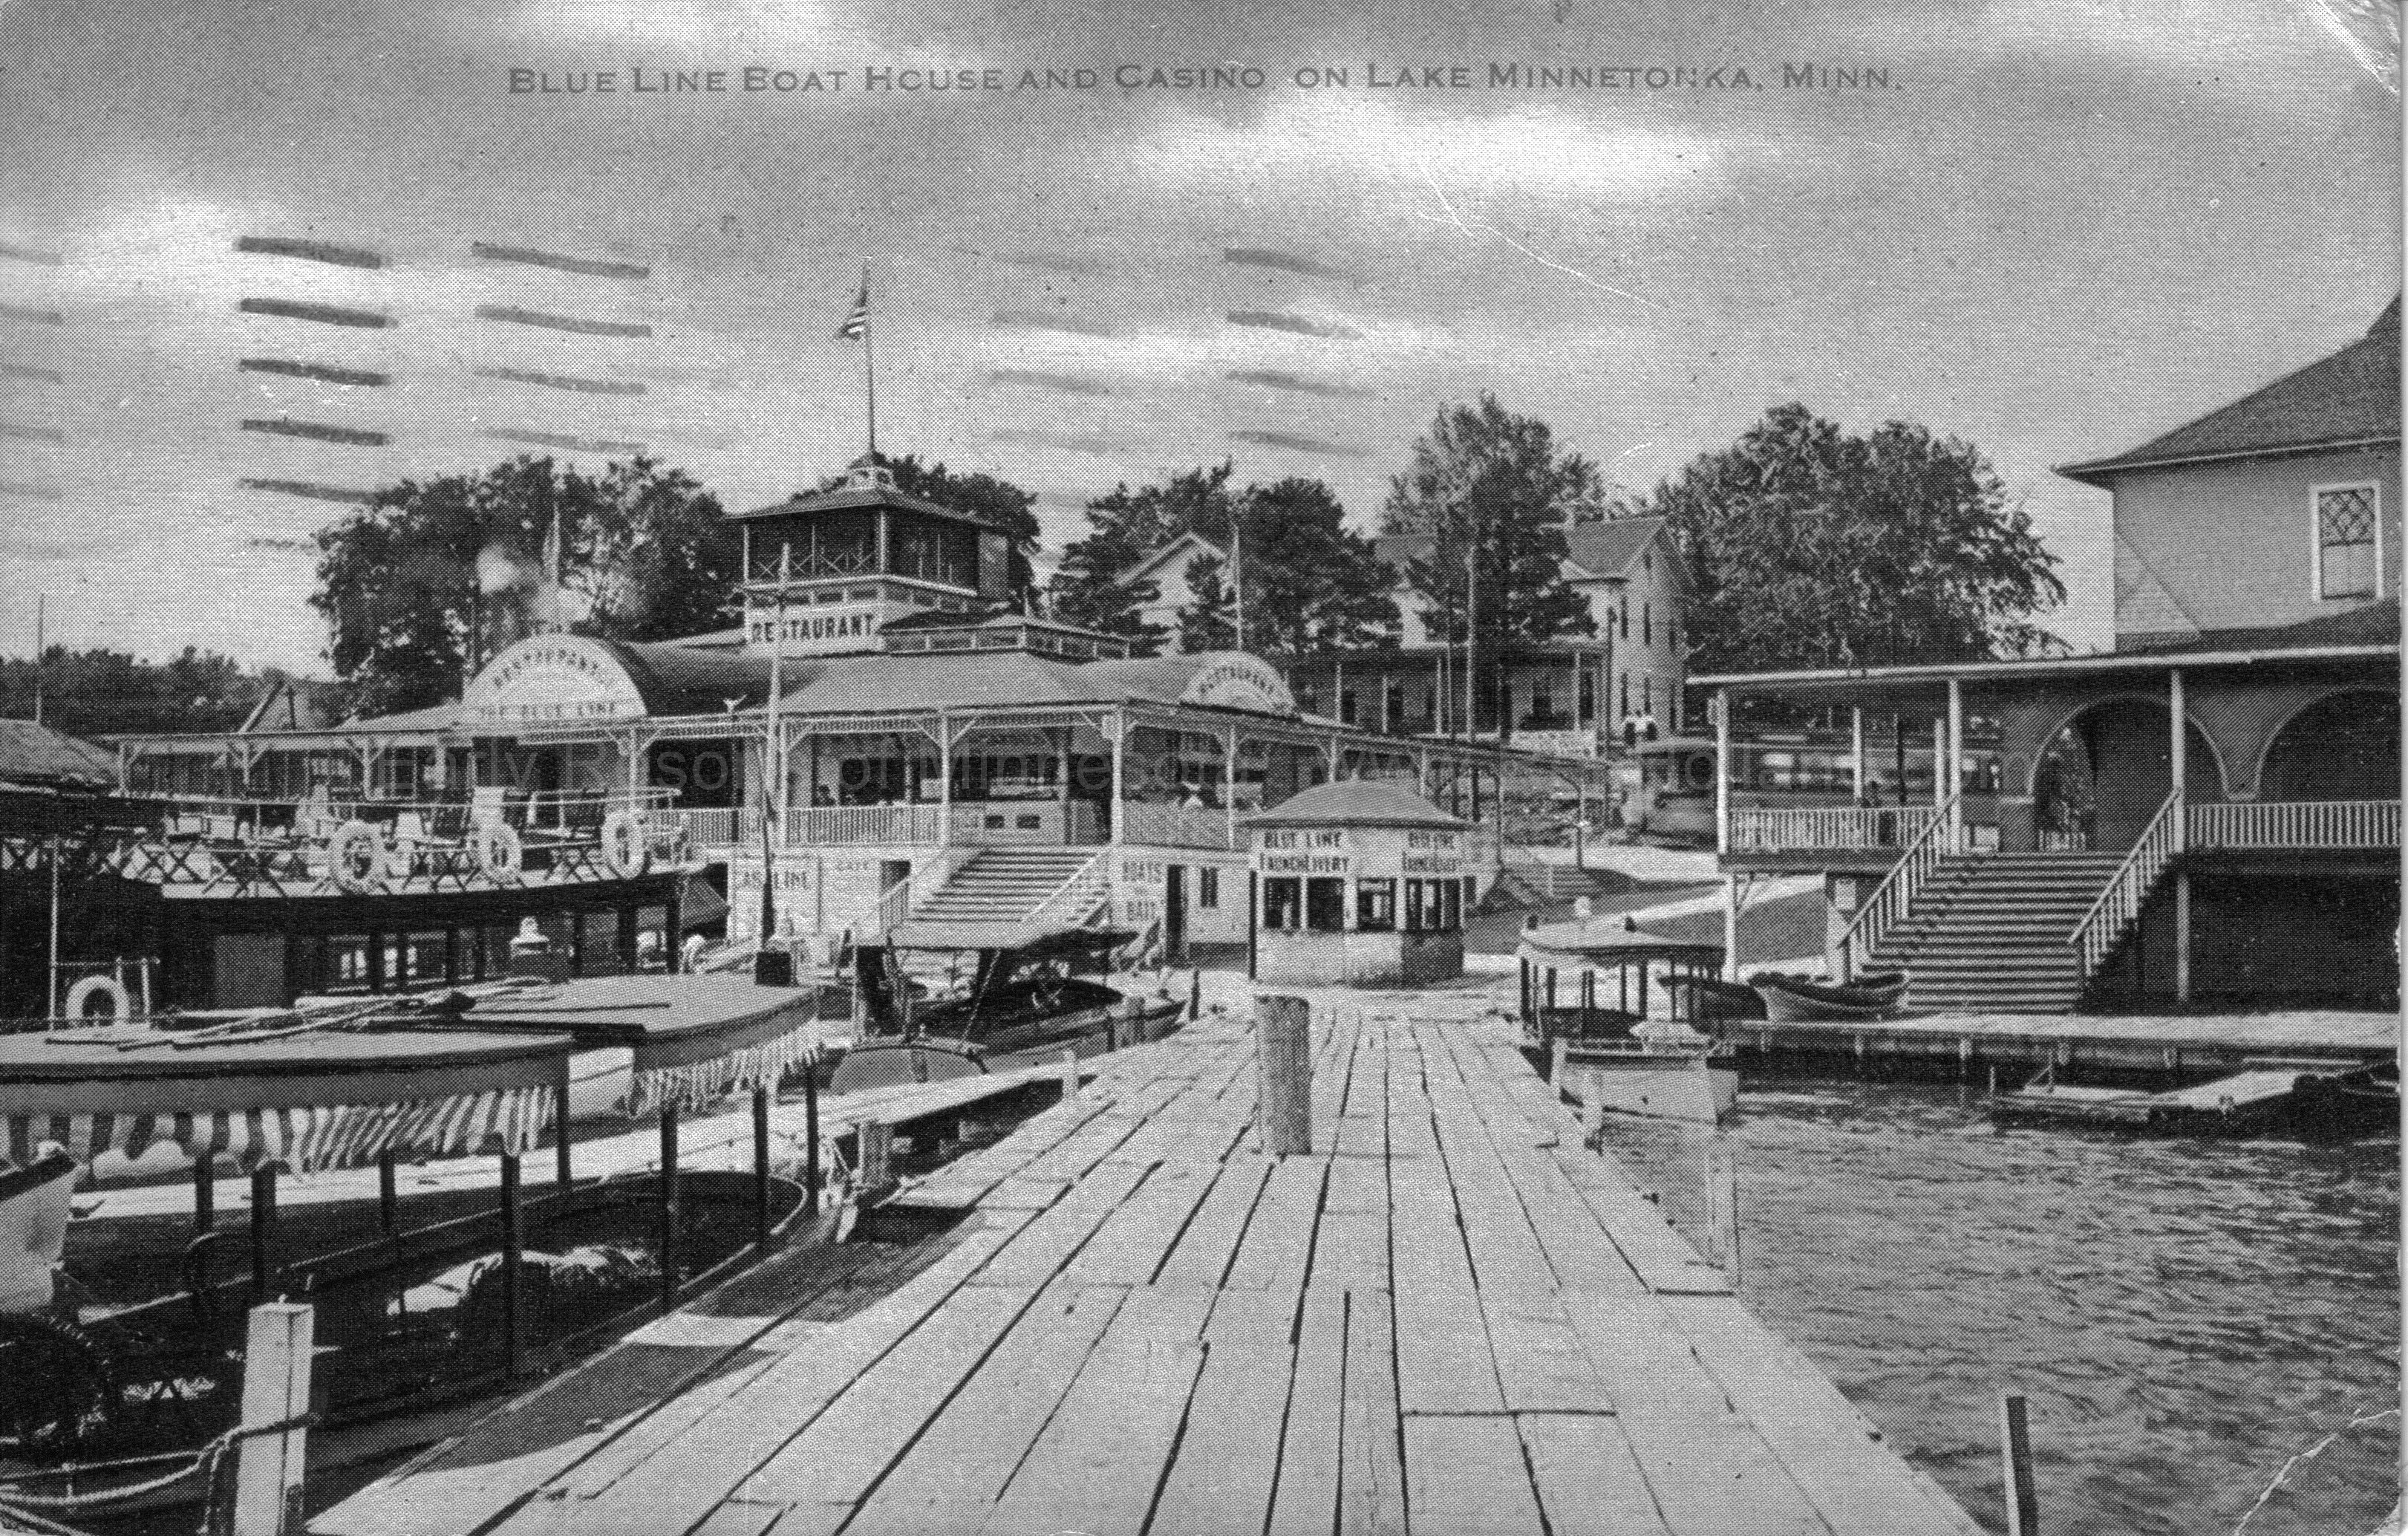 The Blue Line Boat House Casino on Lake Minnetonka